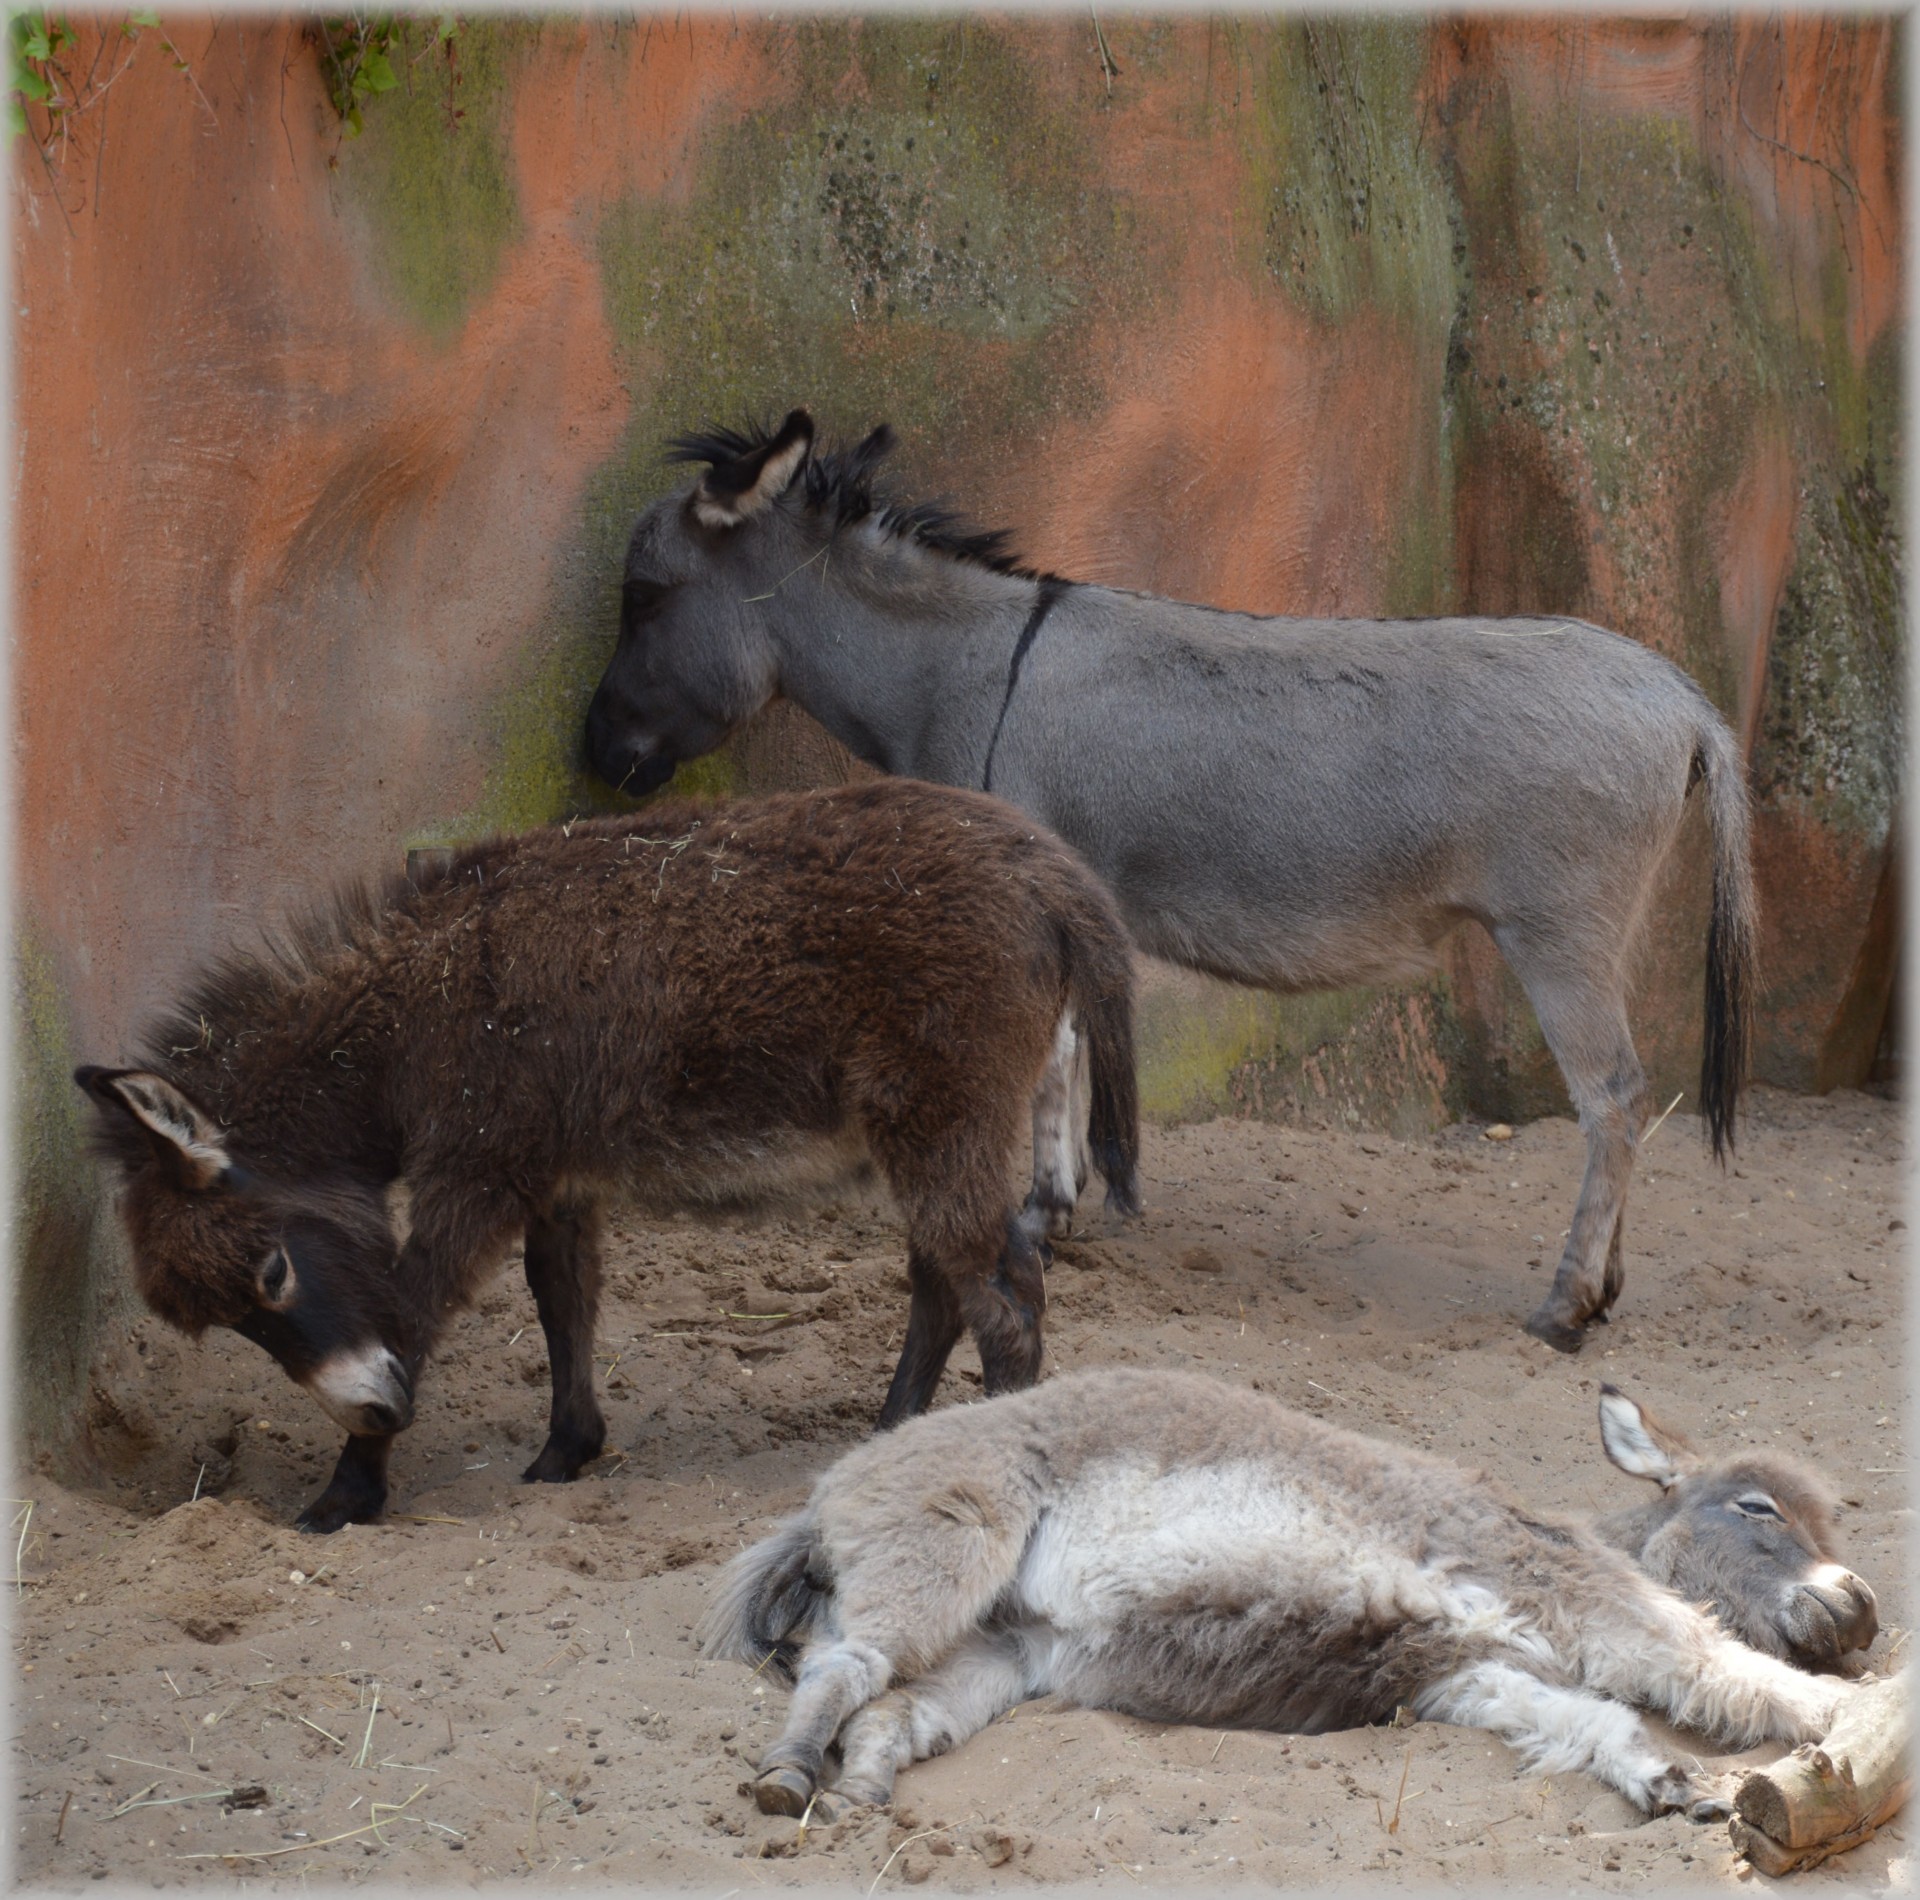 Donkey,mule,pack animal,stubborn,stupid - free image from needpix.com